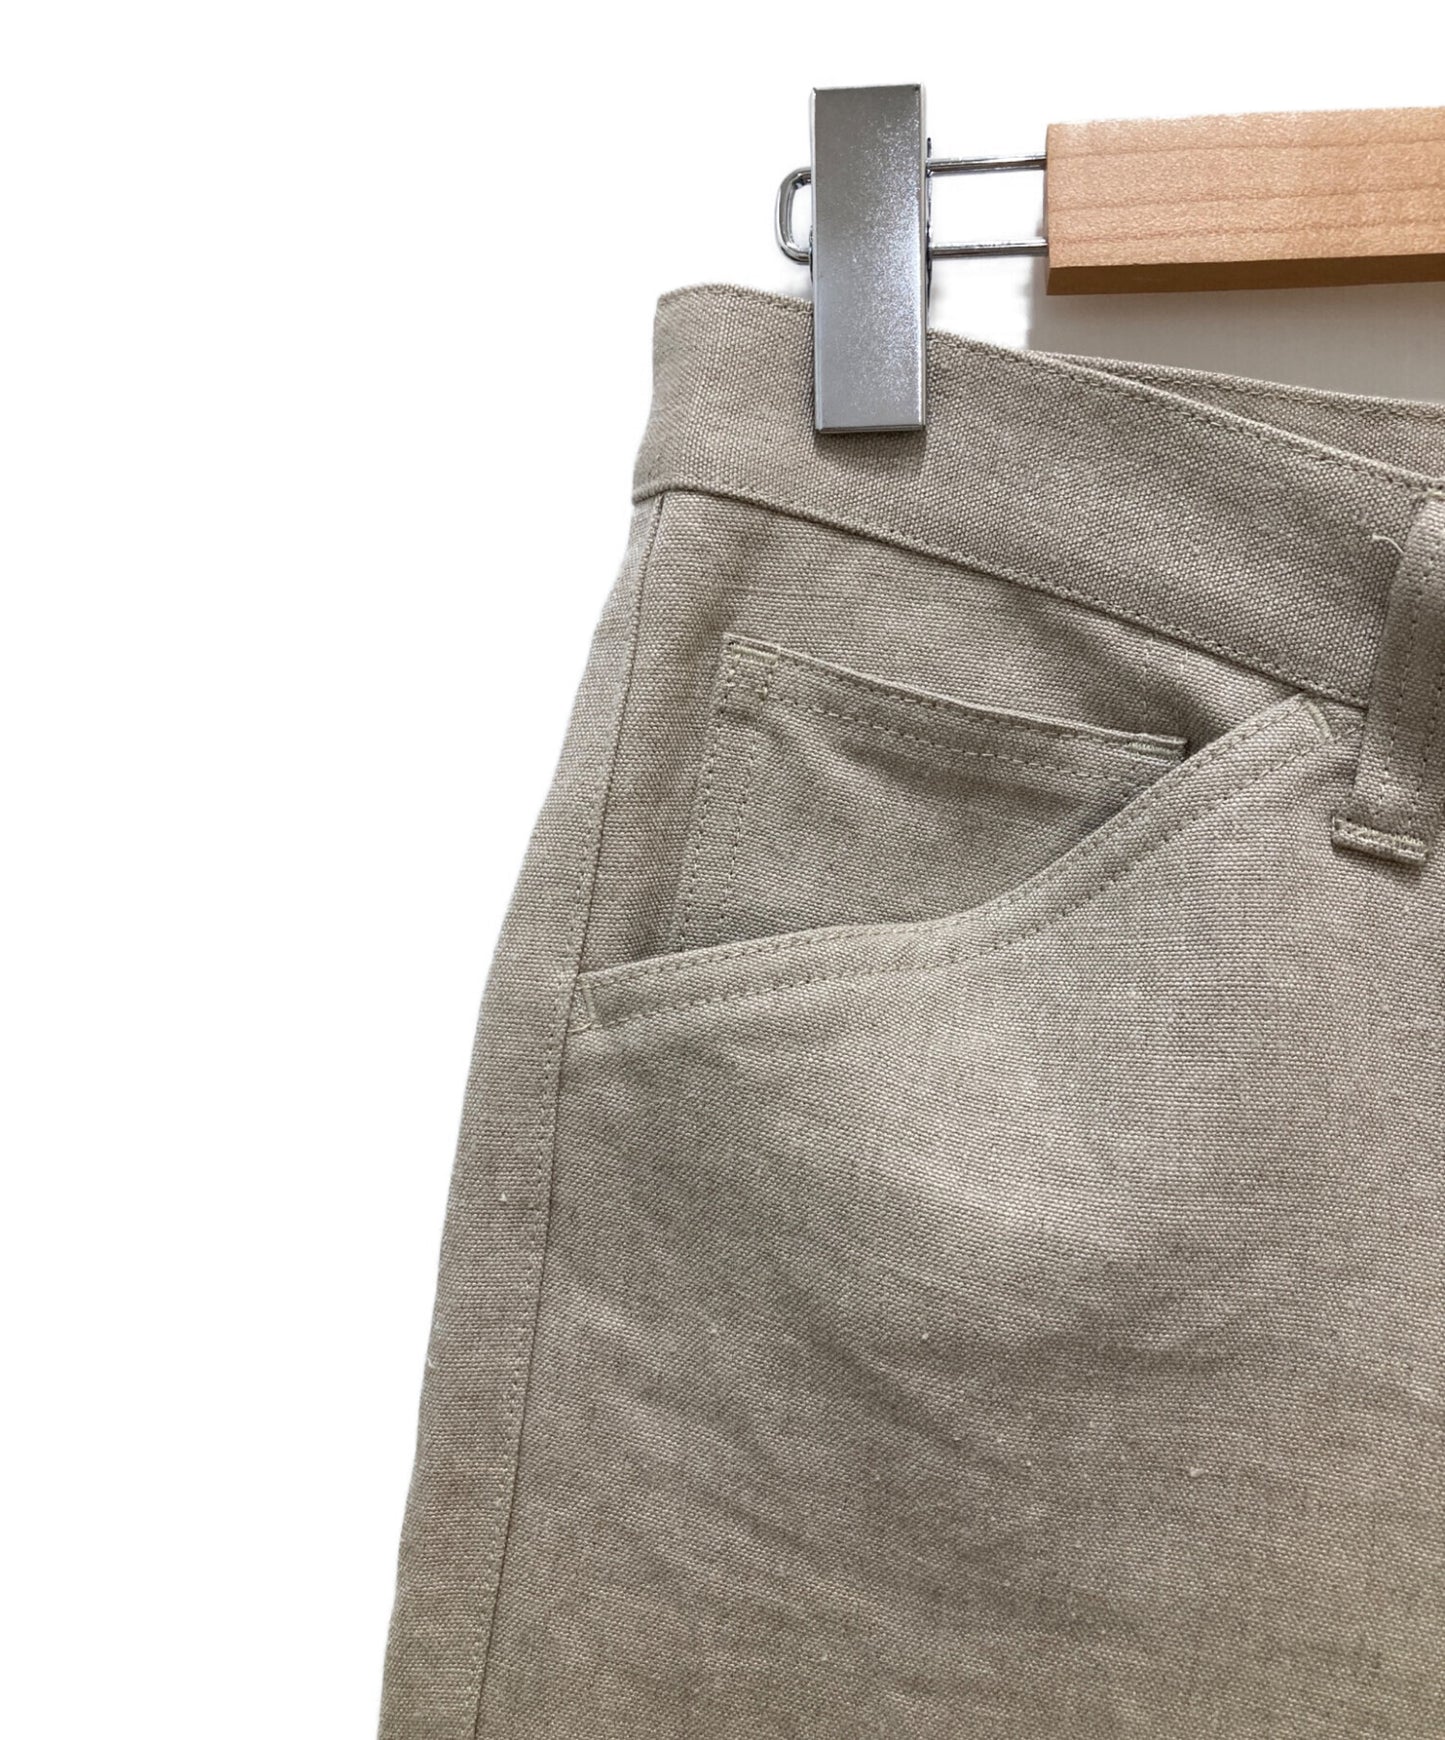 Comme des Garcons Junya Watanabe Man Linen กางเกงขายาว WQ-P010 / AD2015 / 16SS